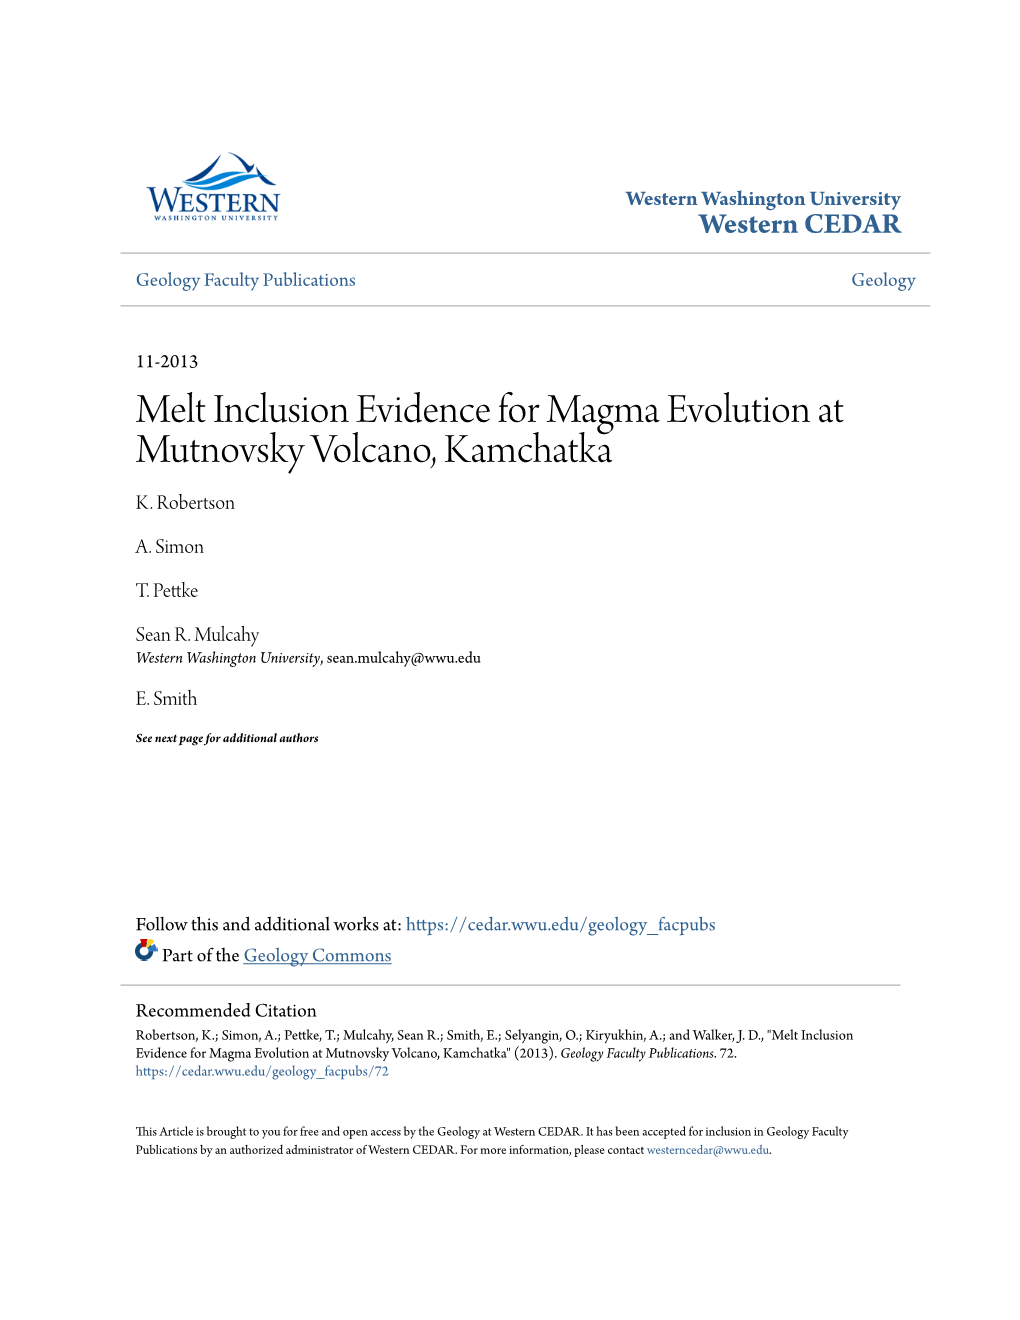 Melt Inclusion Evidence for Magma Evolution at Mutnovsky Volcano, Kamchatka K